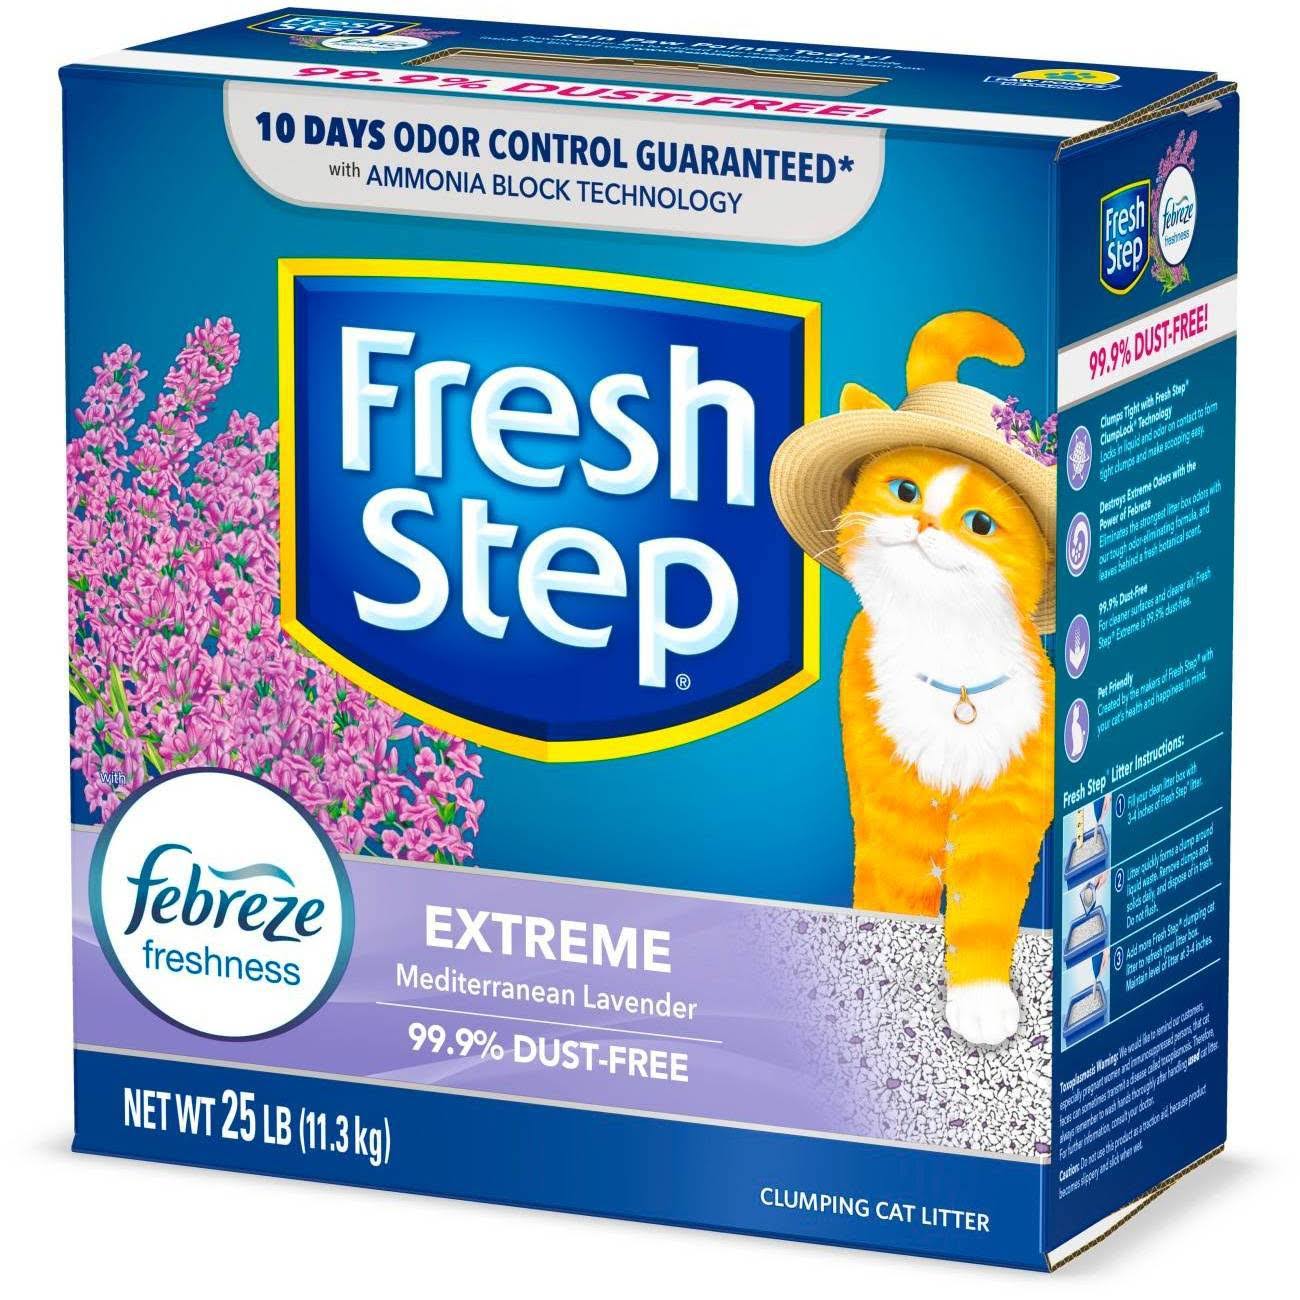 Fresh Step Clumping Cat Litter, Extreme, Mediterranean Lavender - 25 lb